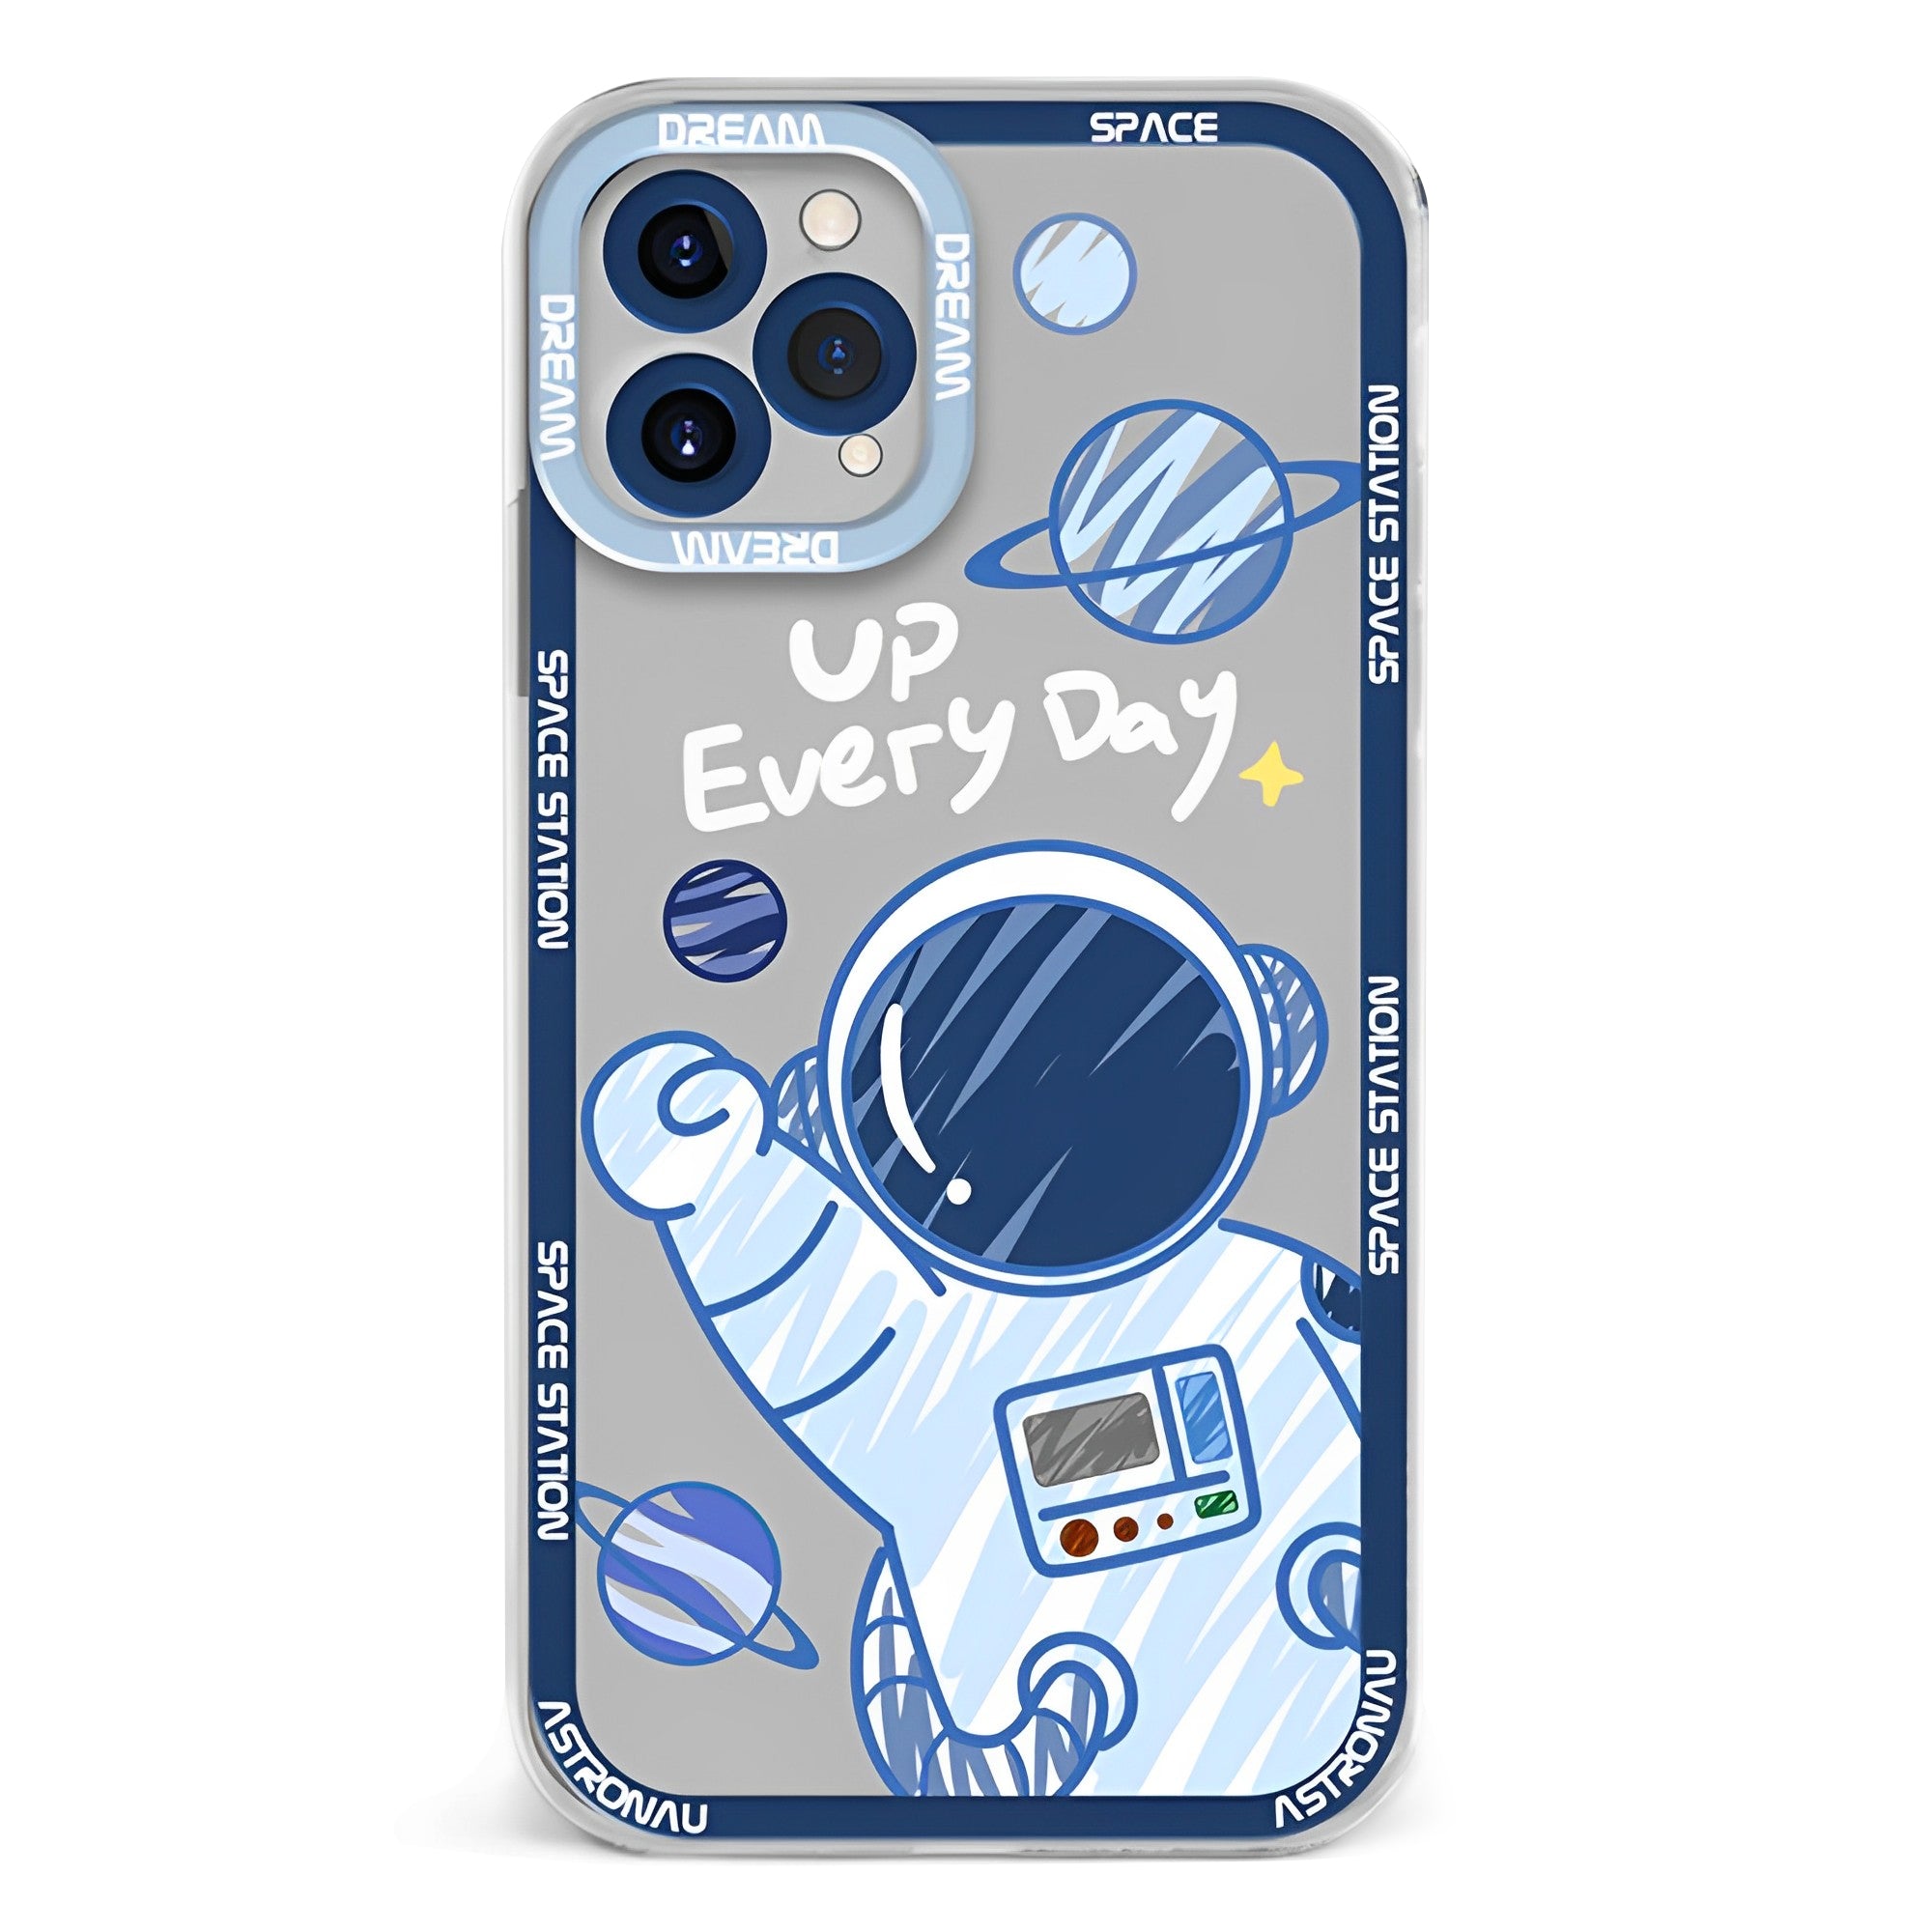 Doodle Astronaut iPhone Case